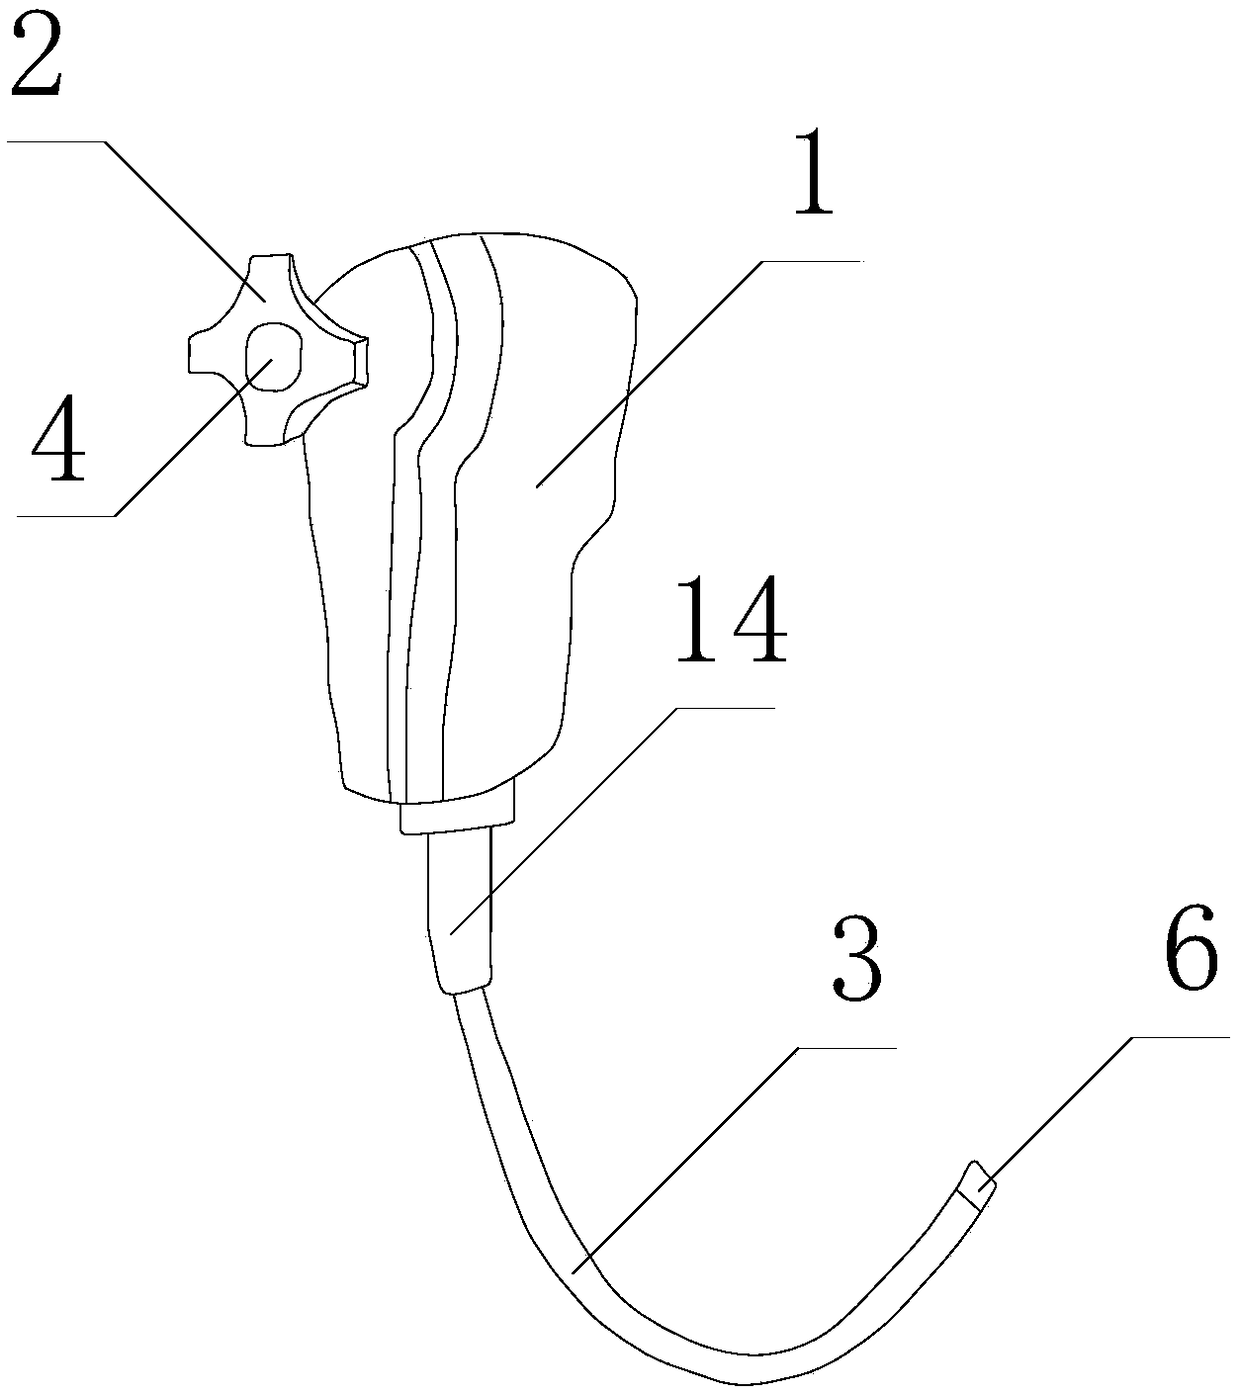 A laparoscopic gastric volume adjustment band curvature adjustment device